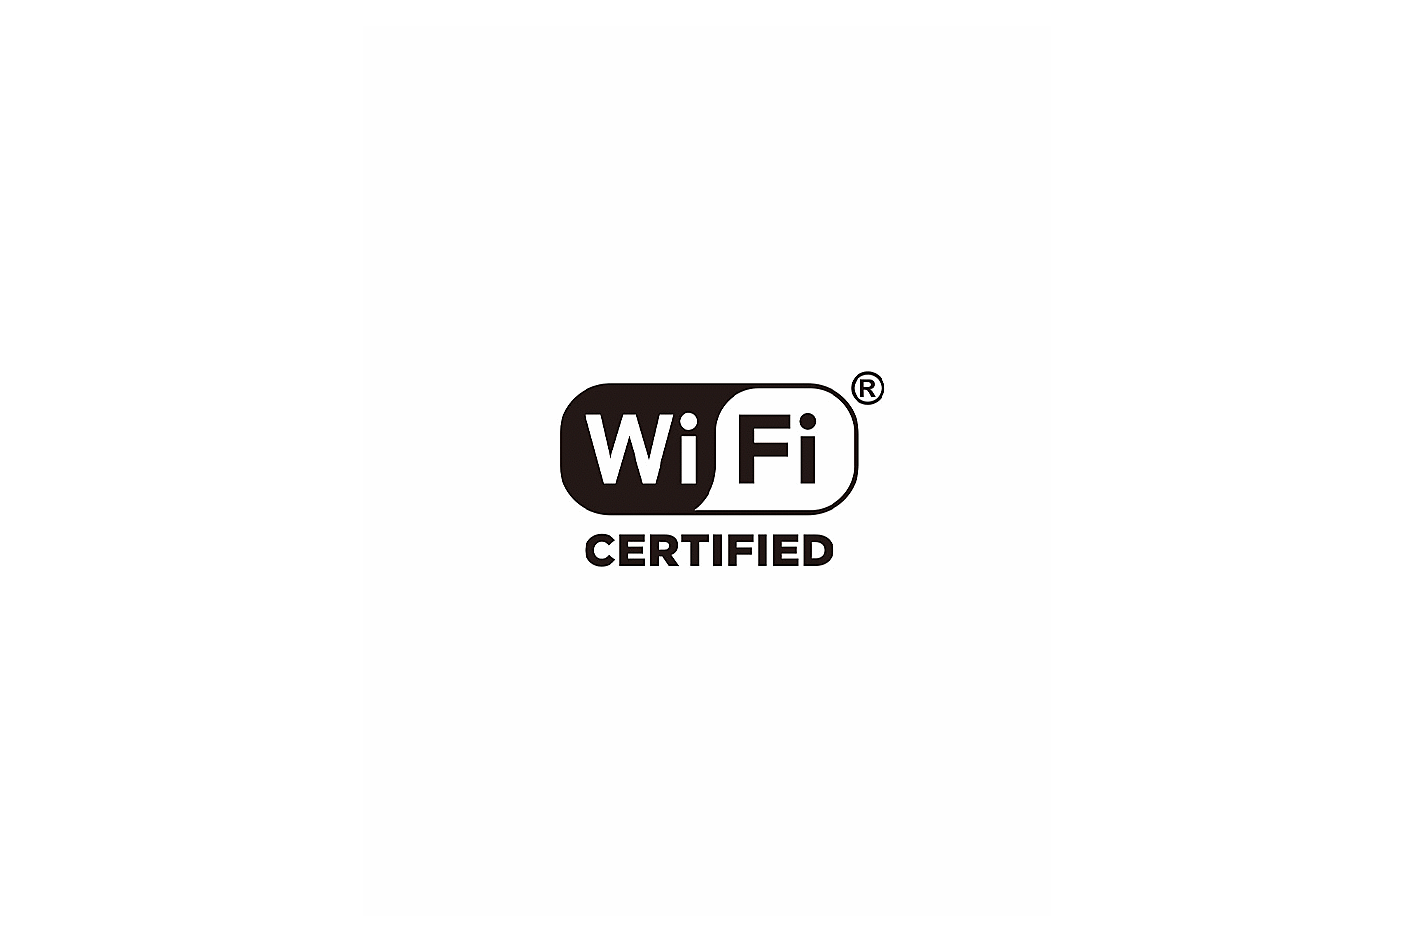 Image of a WiFi Certified logo